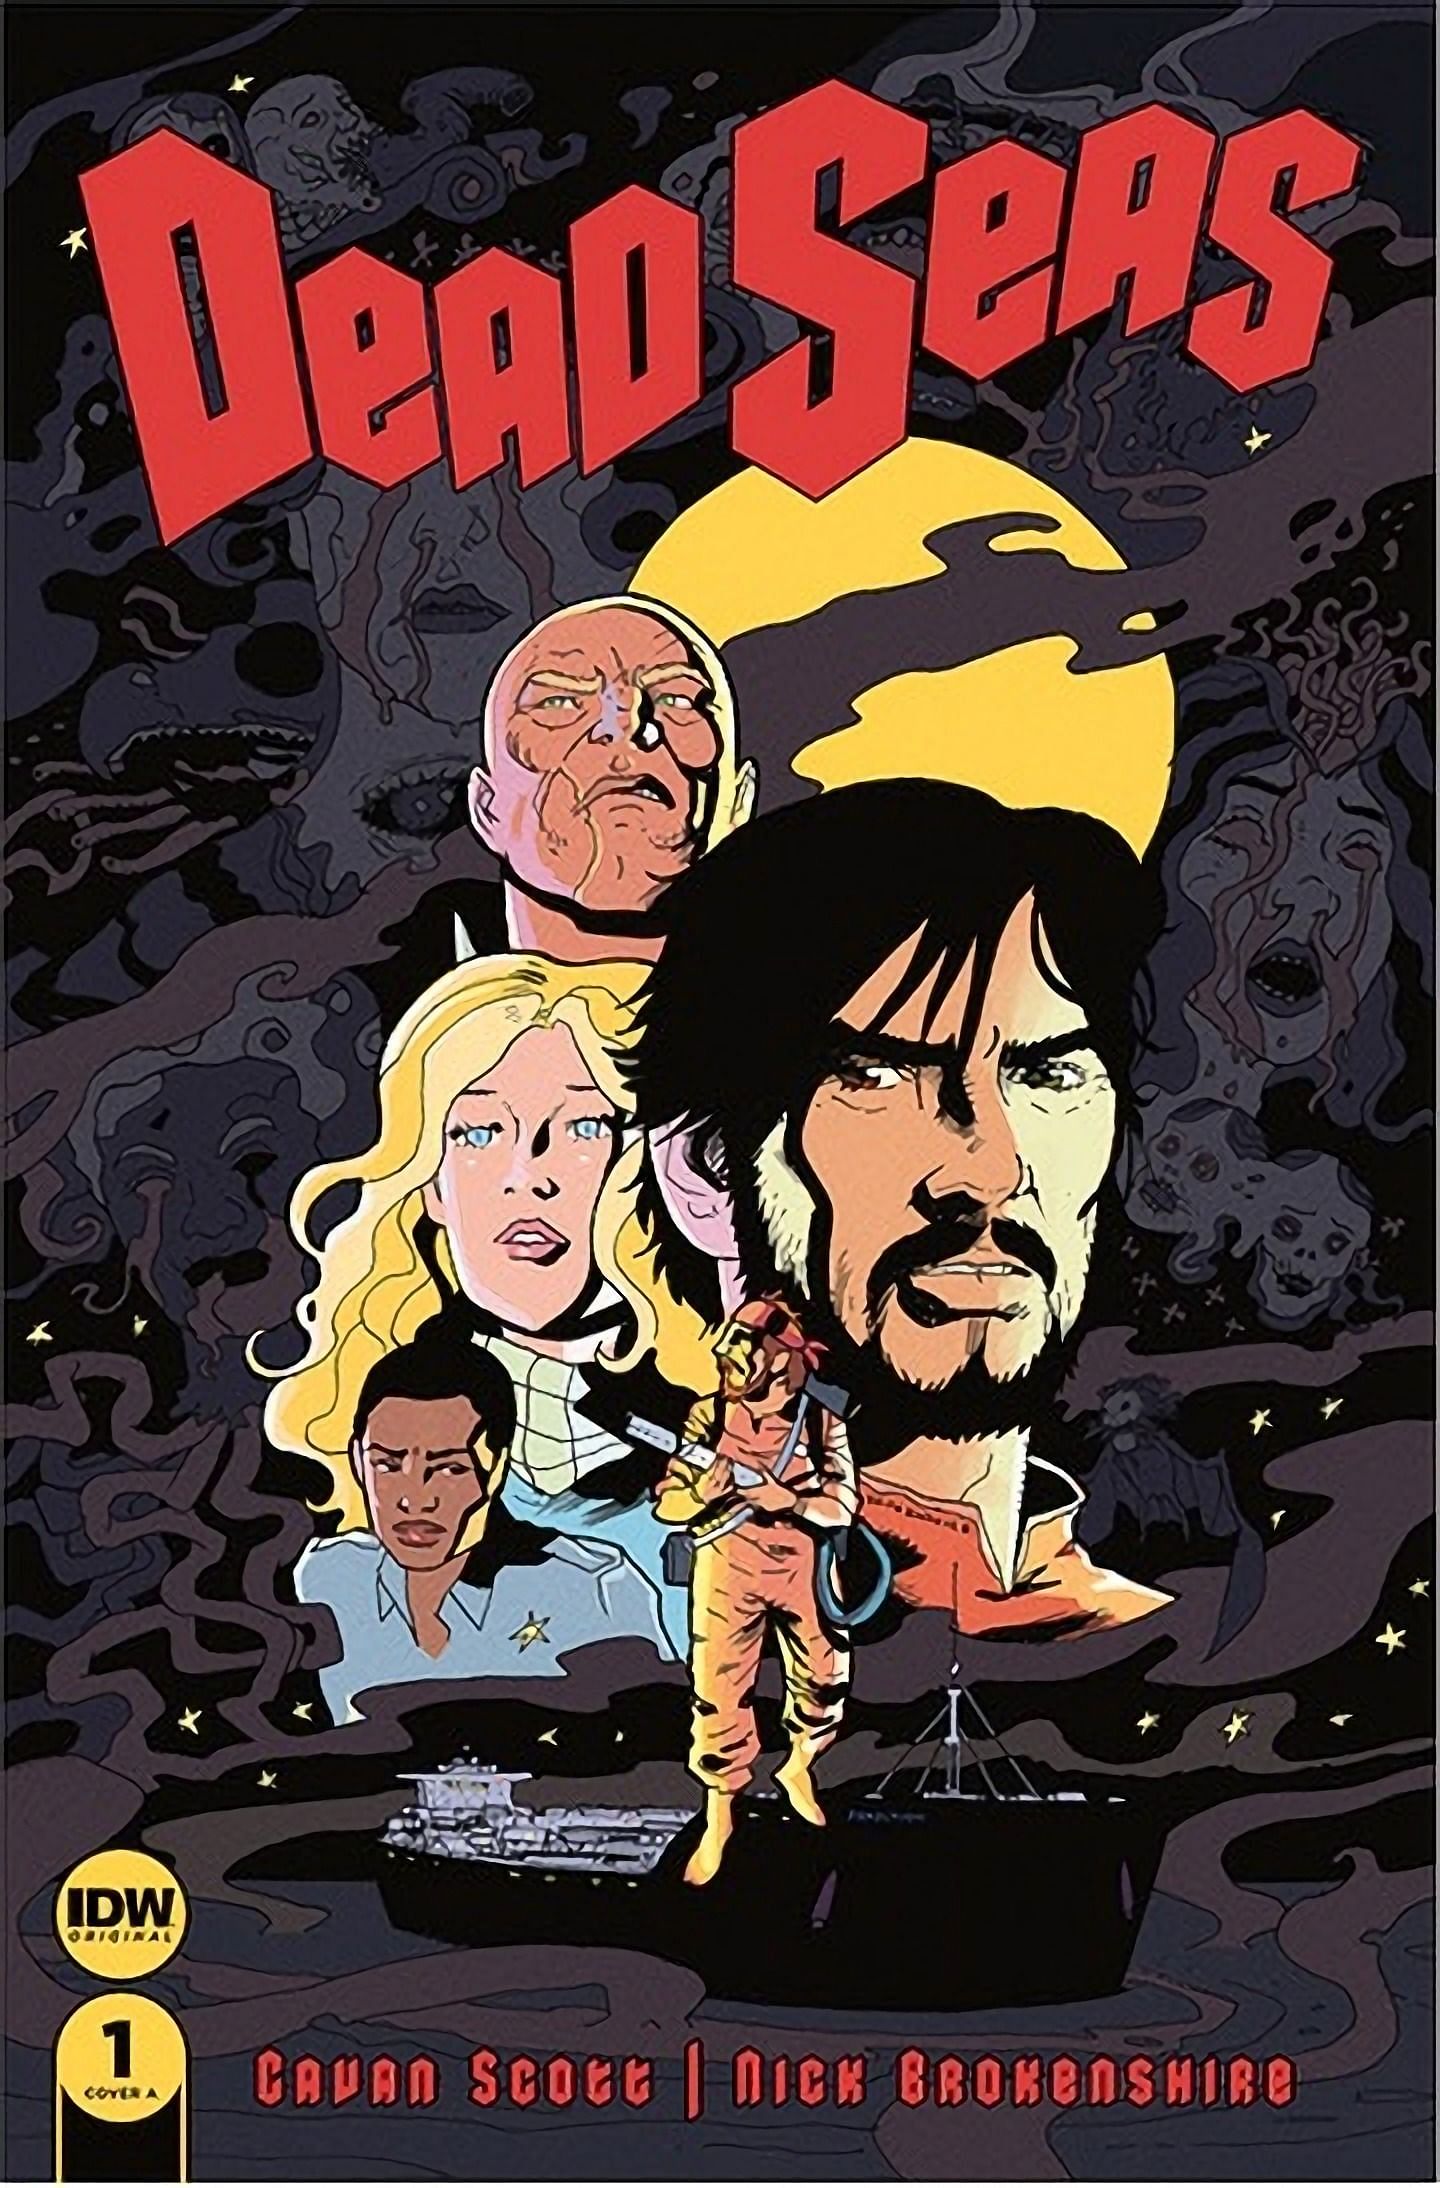 Dead Seas comic cover (Image via IDW Publishing)